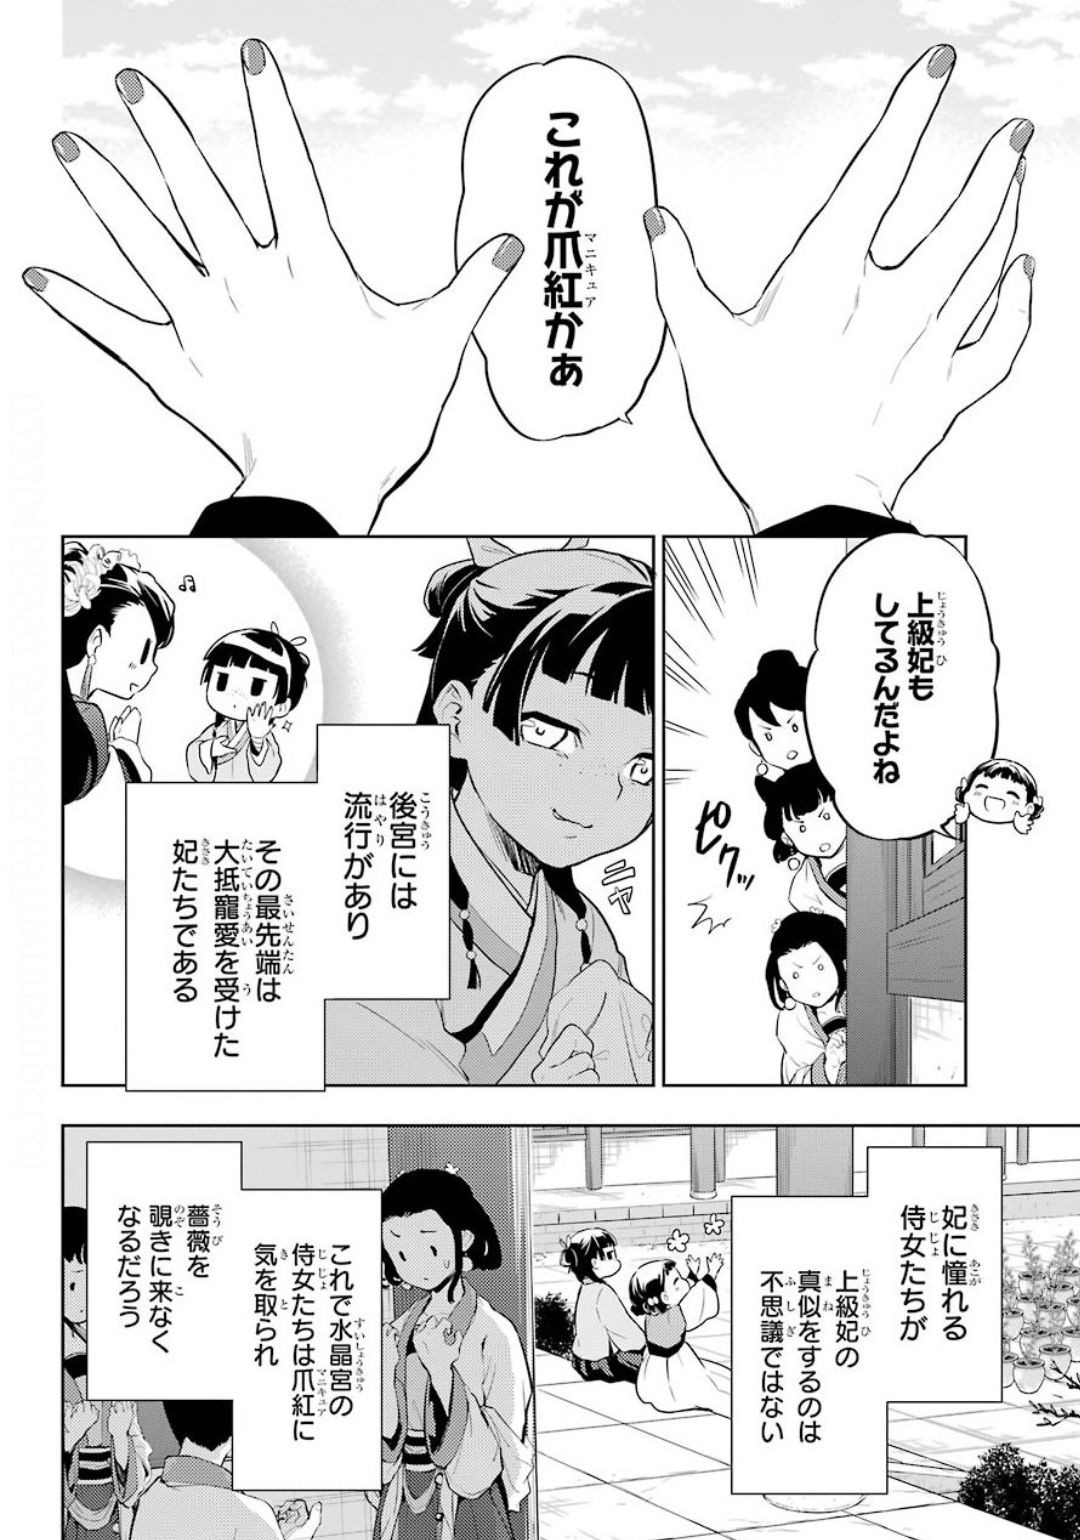 Kusuriya no Hitorigoto - Chapter 36-1 - Page 20